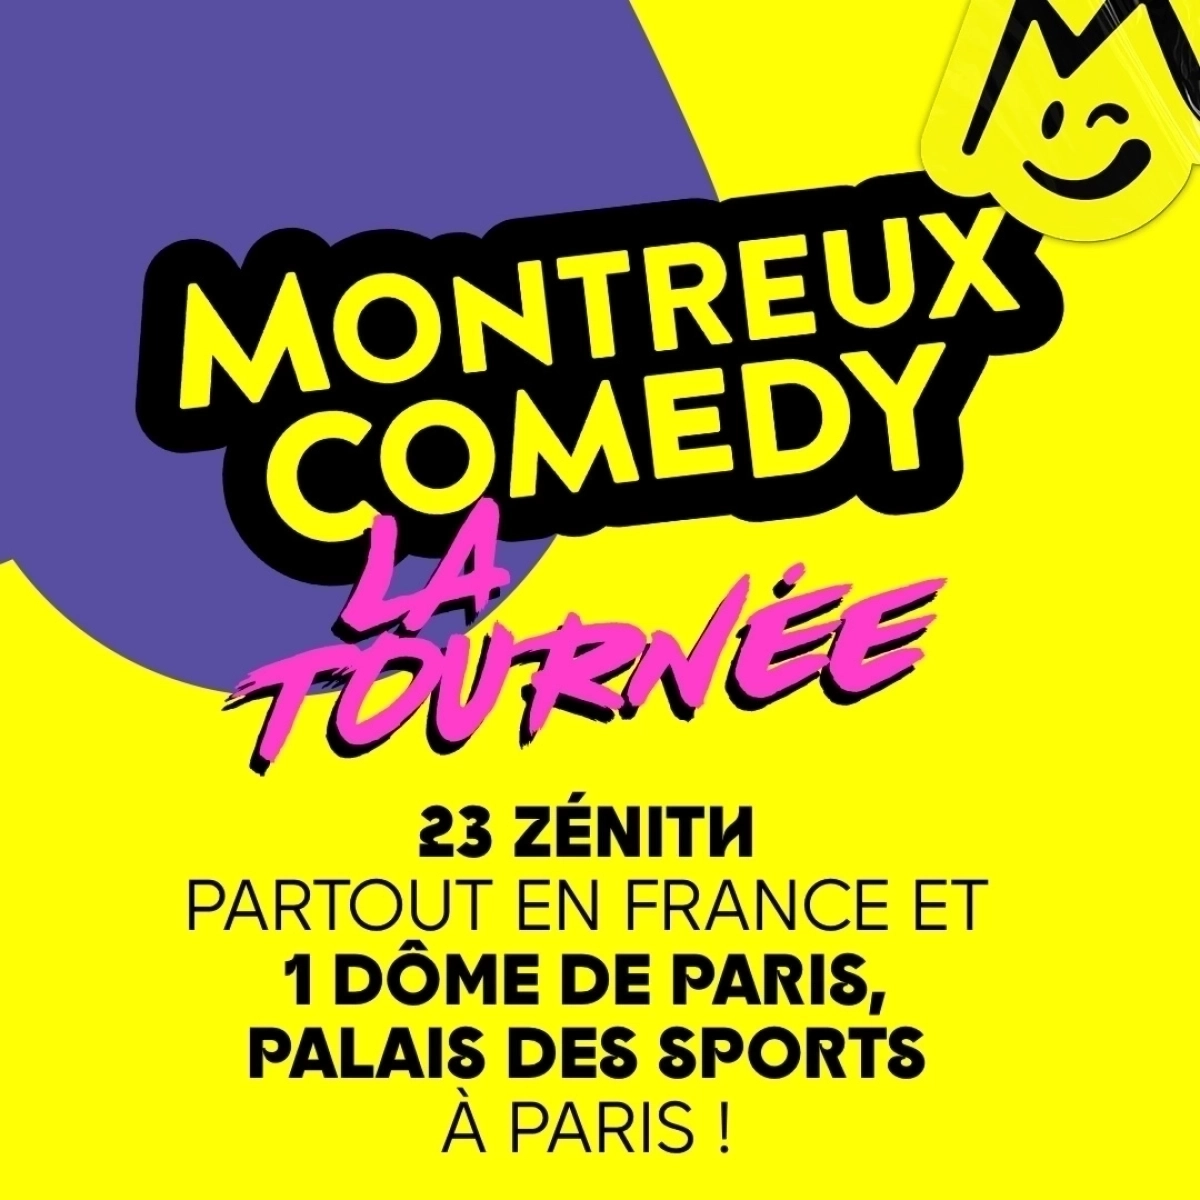 Montreux Comedy - La Tournée in der Zenith Montpellier Tickets